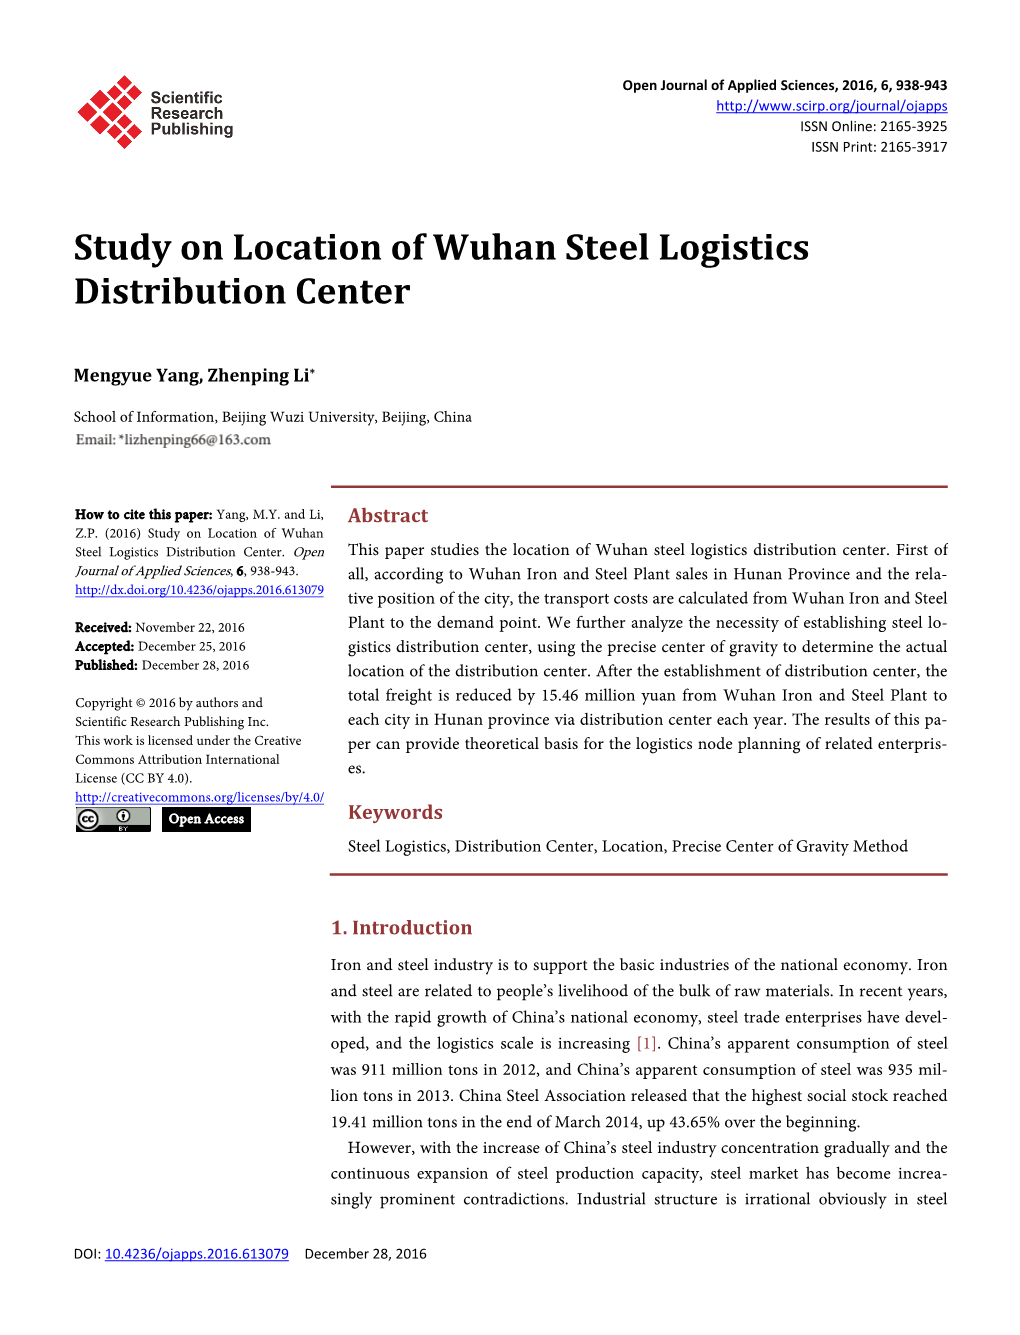 Study on Location of Wuhan Steel Logistics Distribution Center